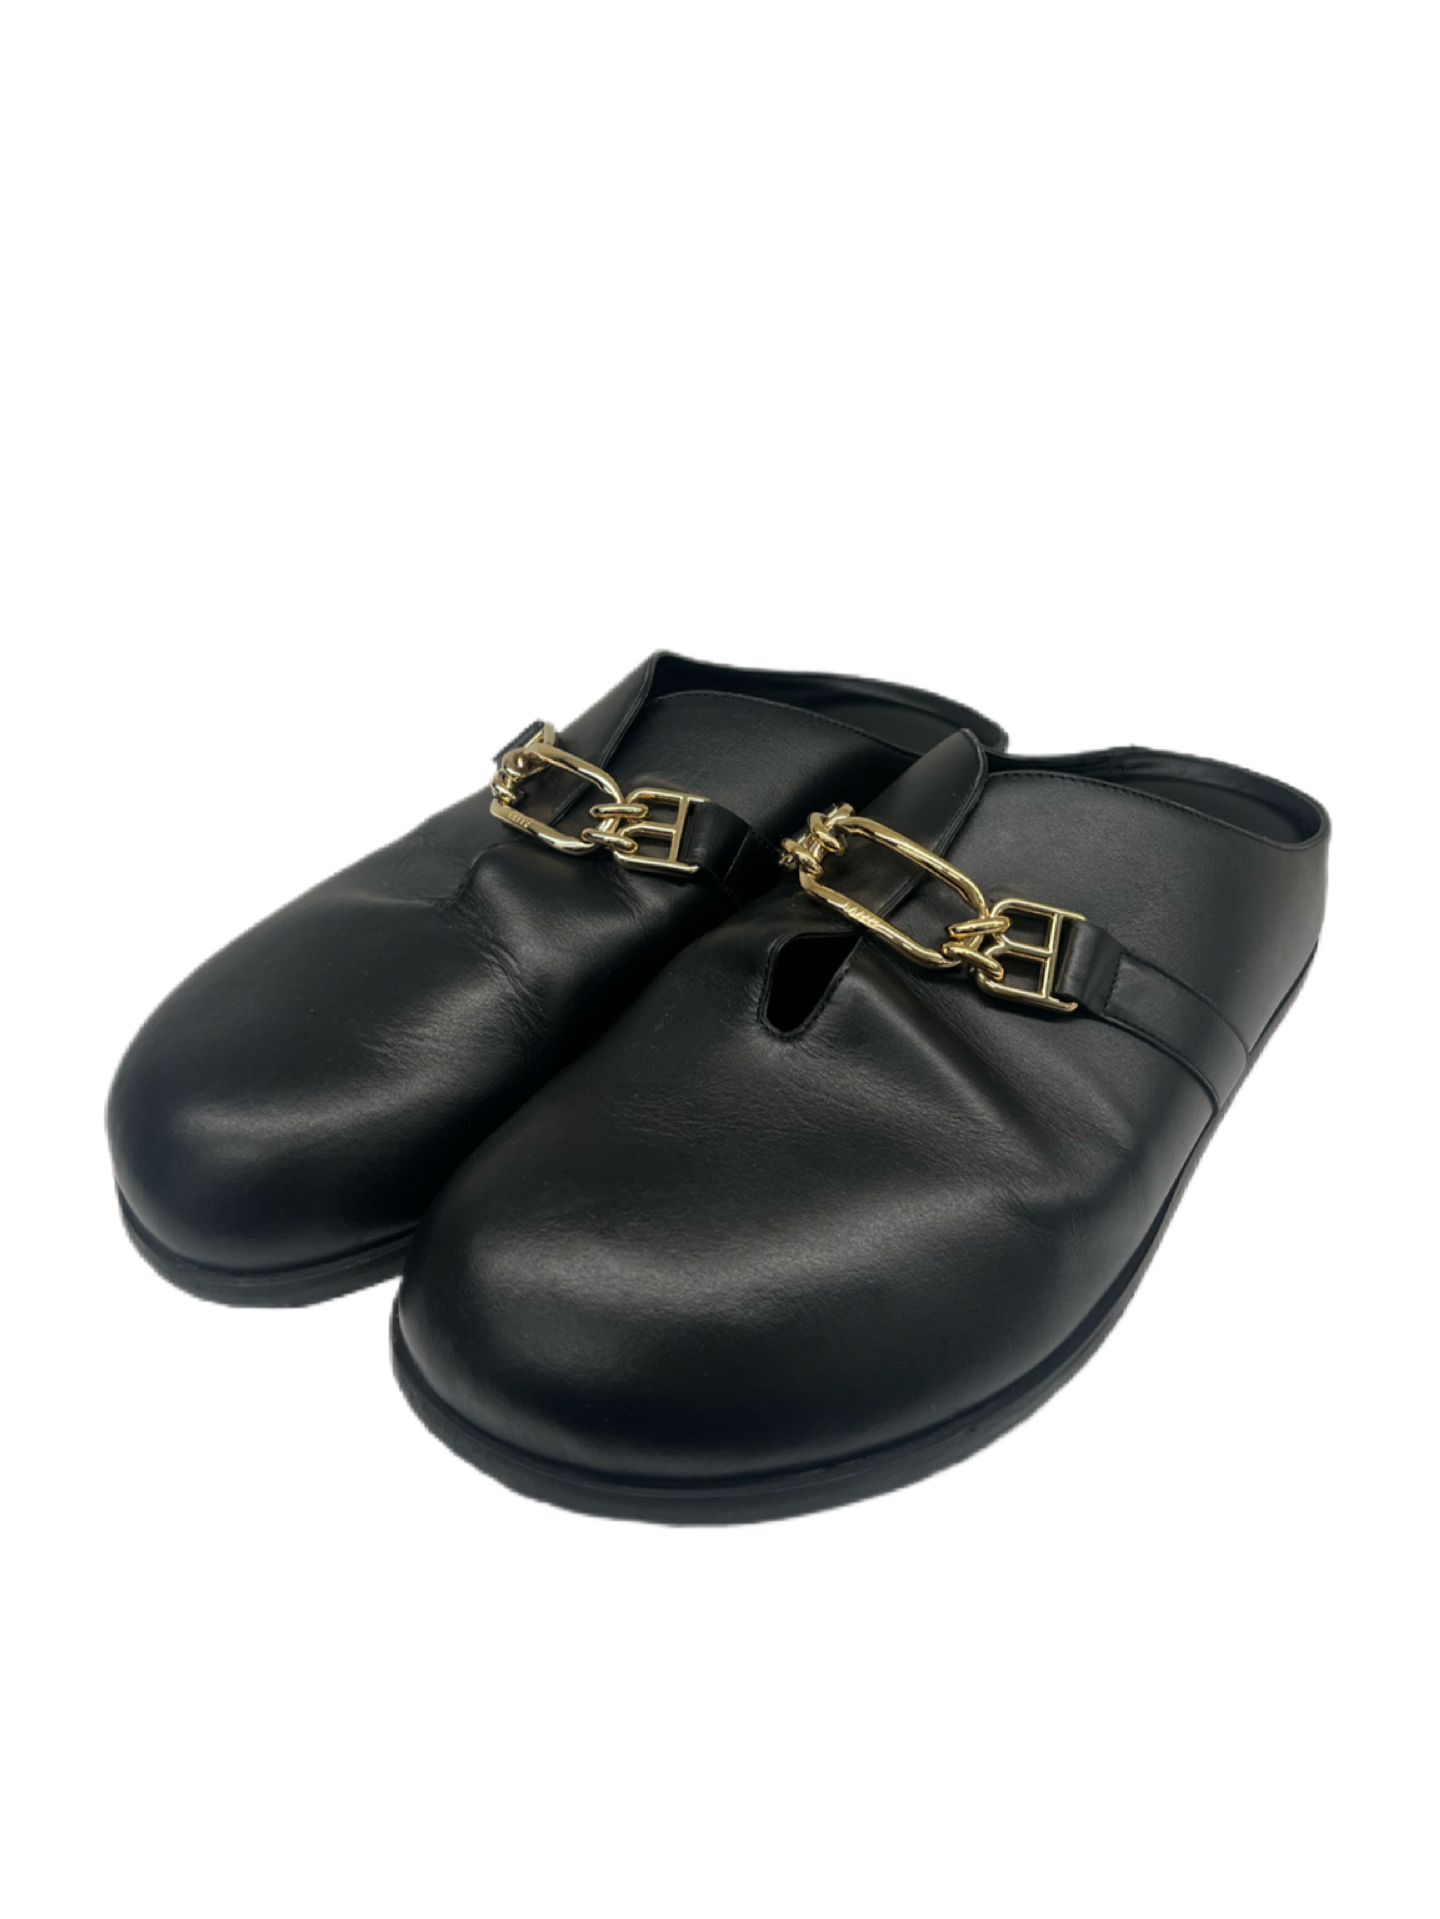 Bally Black Gold BB Link Slip on Sandals. Size: 39